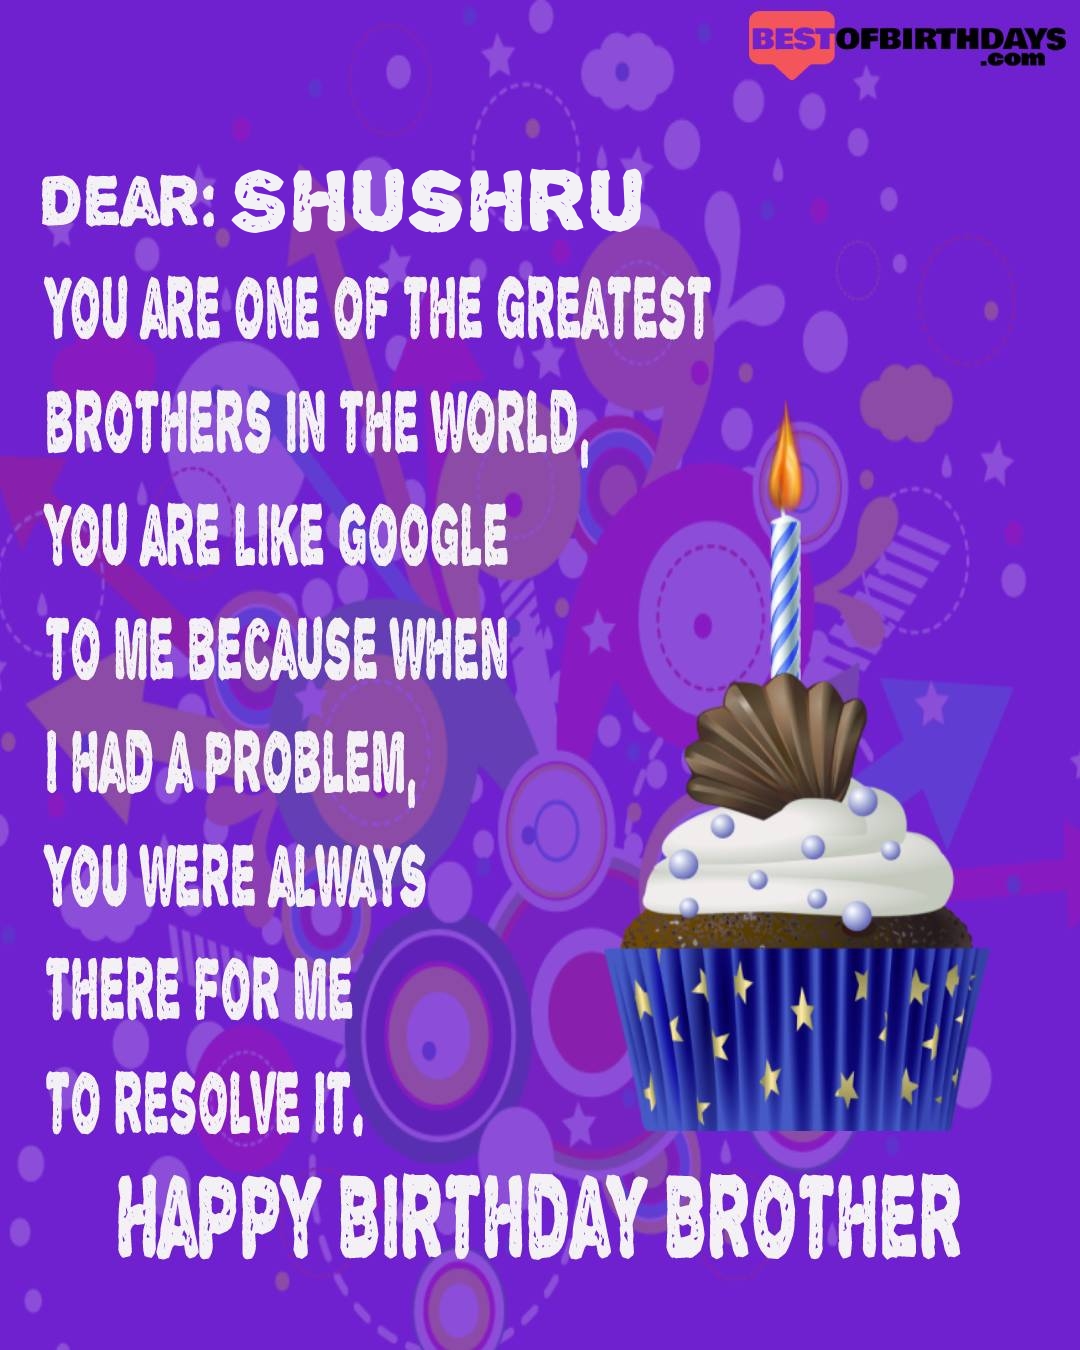 Happy birthday shushru bhai brother bro